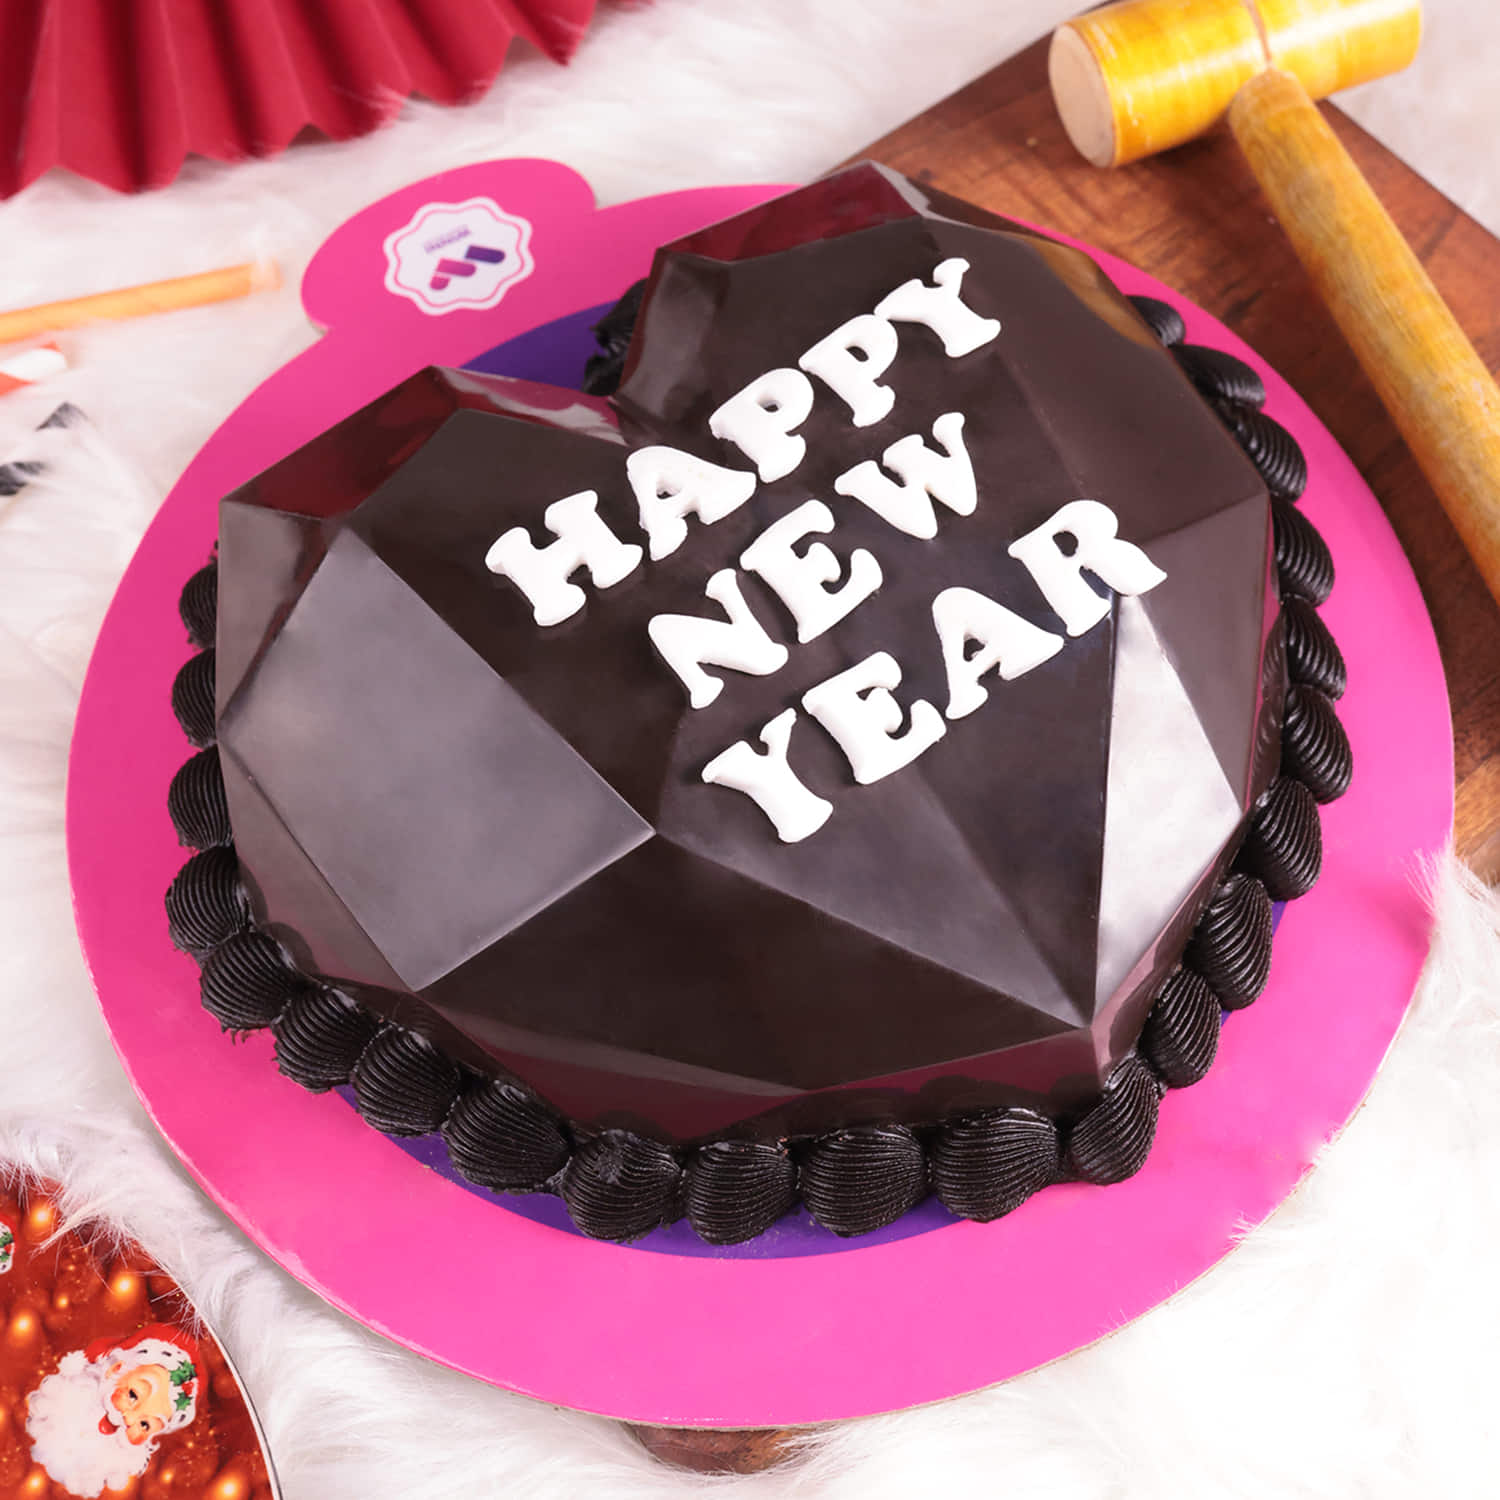 New Year Chocolate Cake, Best Cake For New Year - MrCake